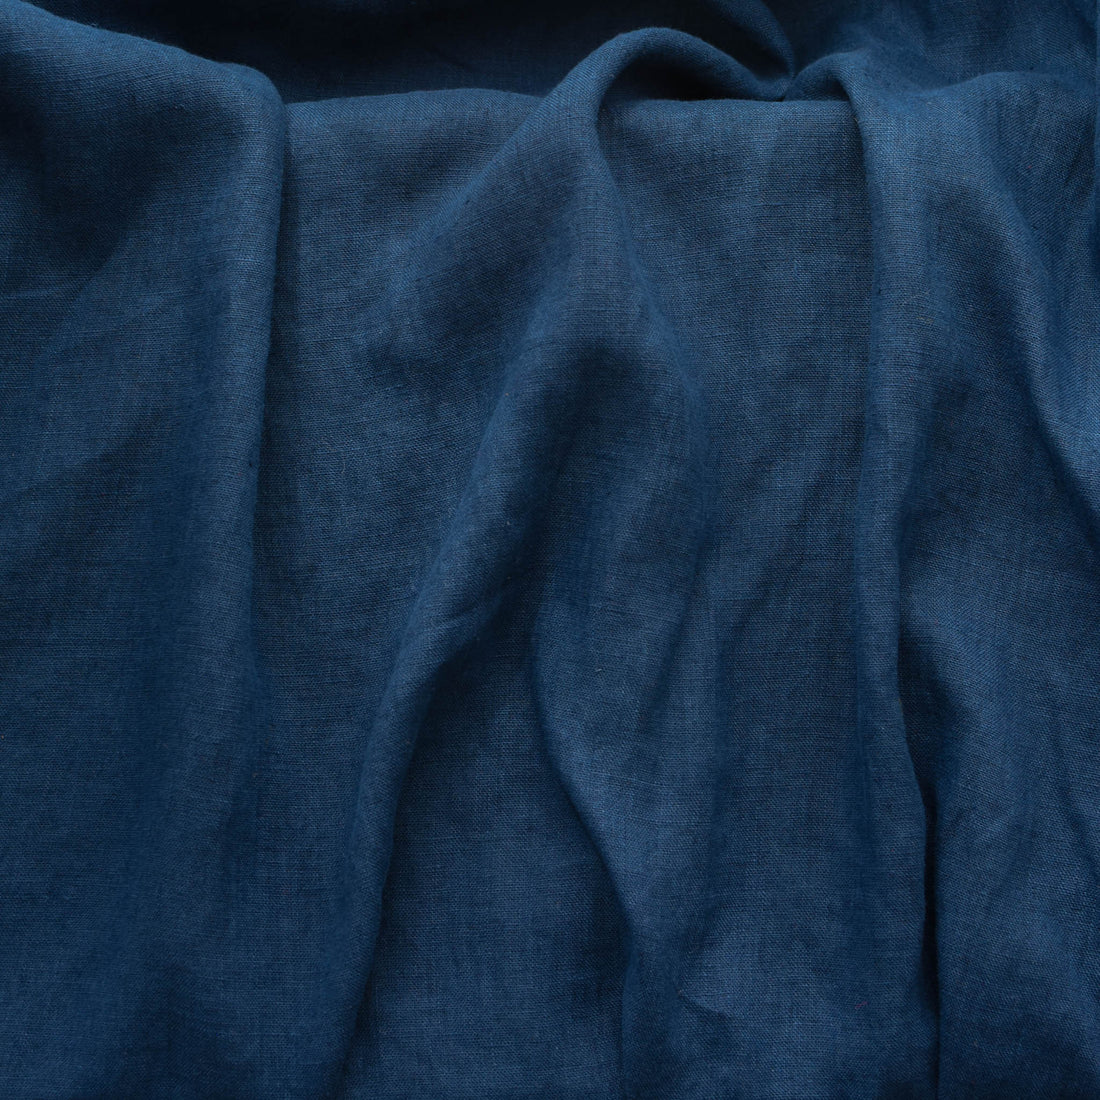 Laundered Linen 185 Fabric, Goodnight blue